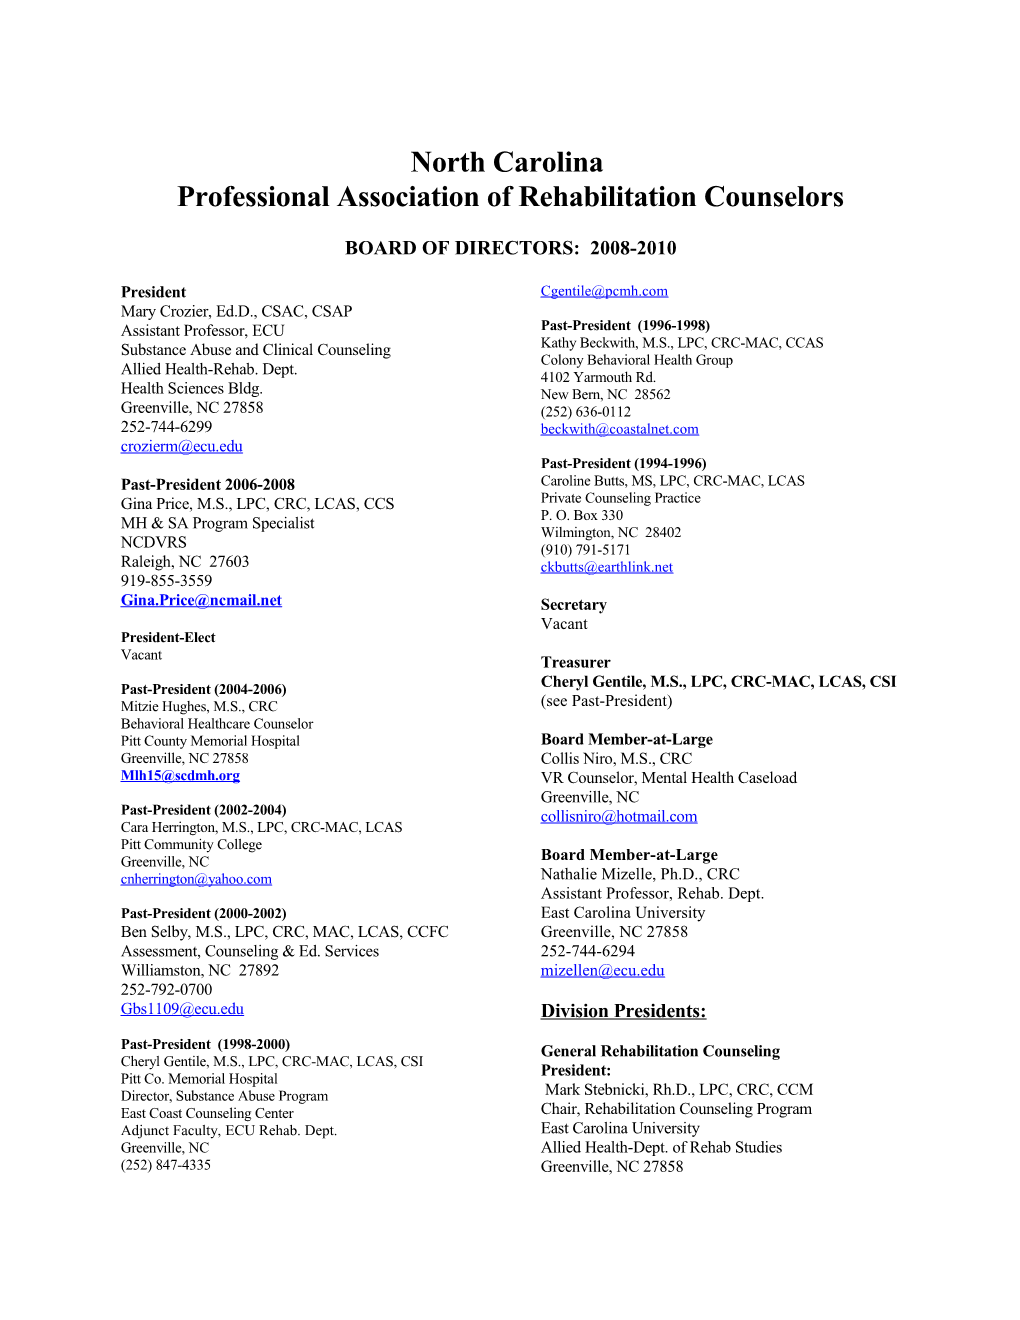 Professional Association of Rehabilitation Counselors